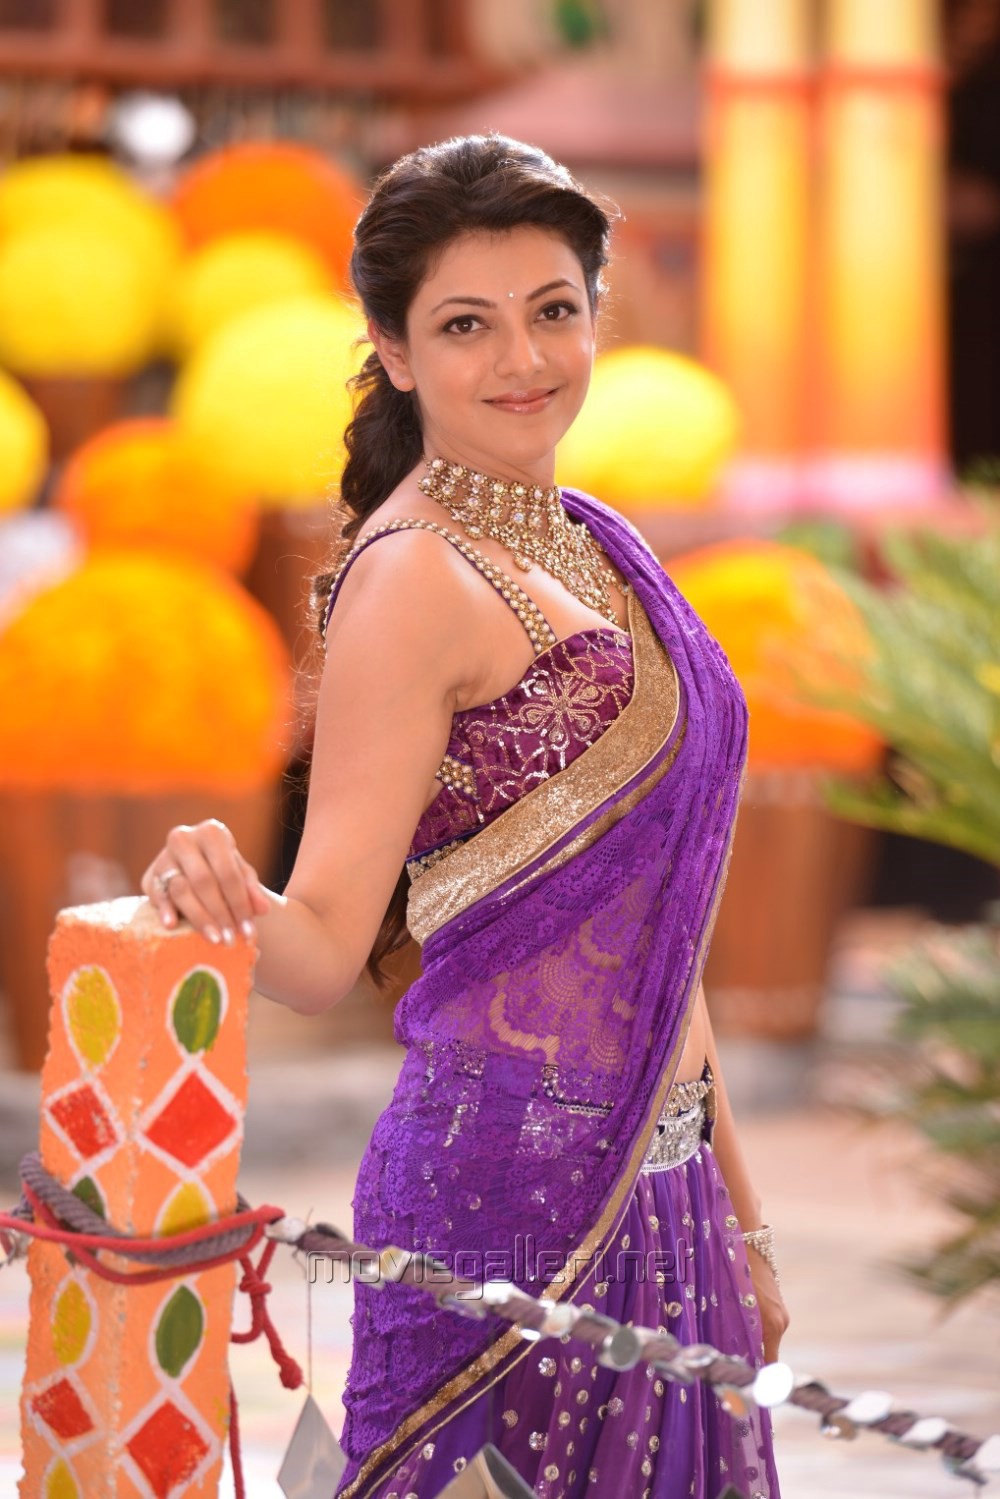 Actress Kajal Agarwal in Ram Leela Tamil Movie Stills